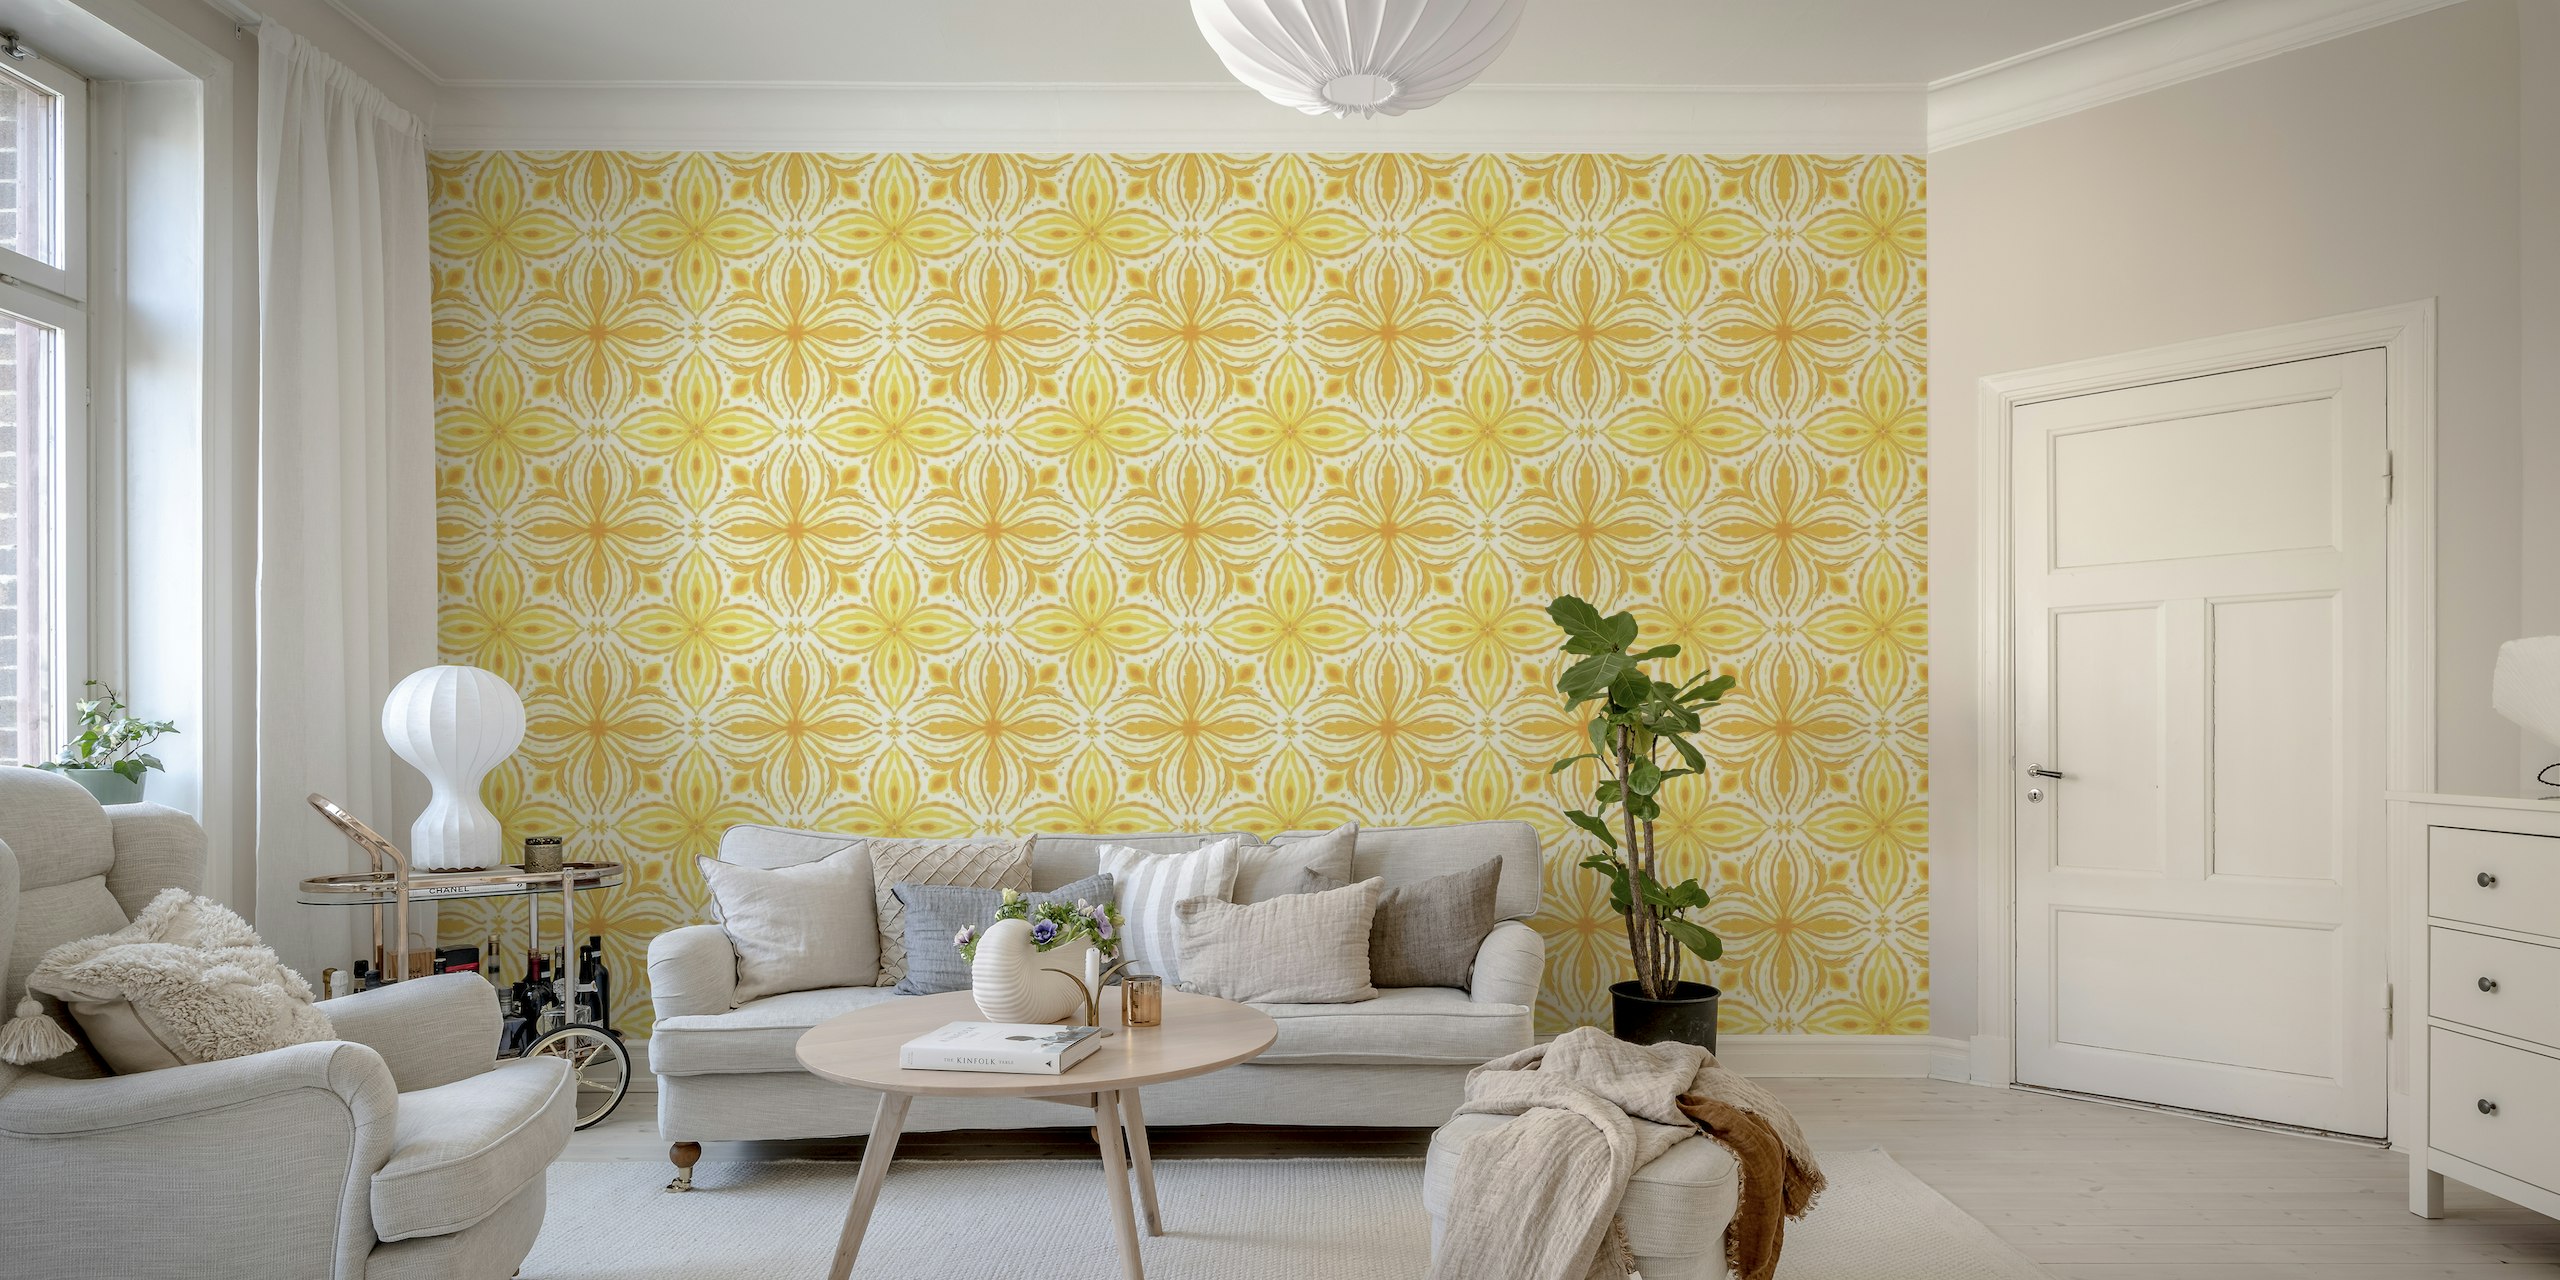 Ornate tiles, yellow and orange 9 behang